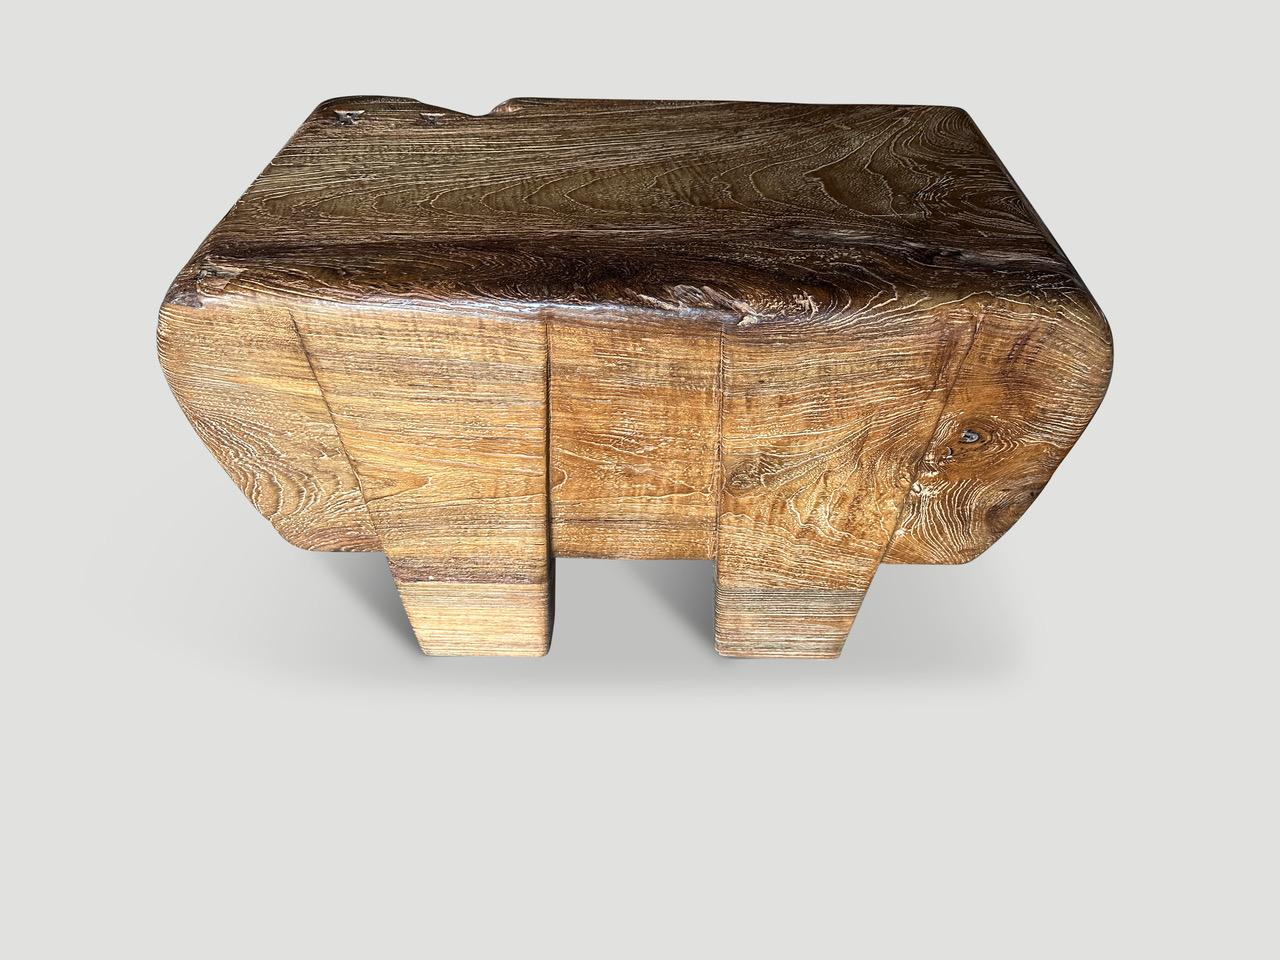 Wood Andrianna Shamaris Minimalist Coffee Table, Side Table Or Bench